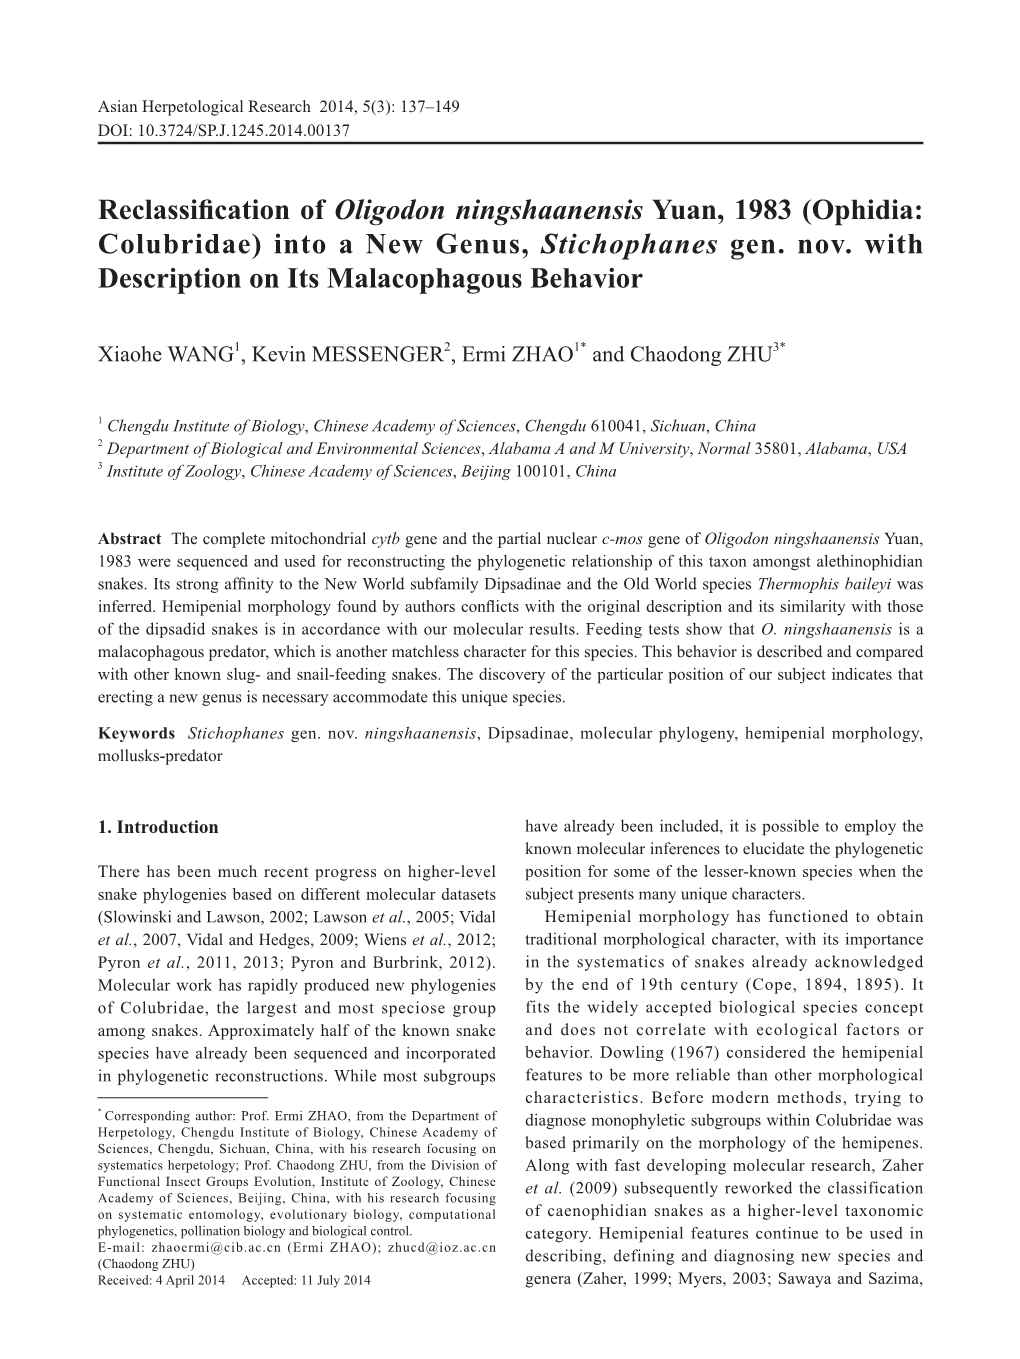 Reclassification of Oligodon Ningshaanensis Yuan, 1983 (Ophidia: Colubridae) Into a New Genus, Stichophanes Gen